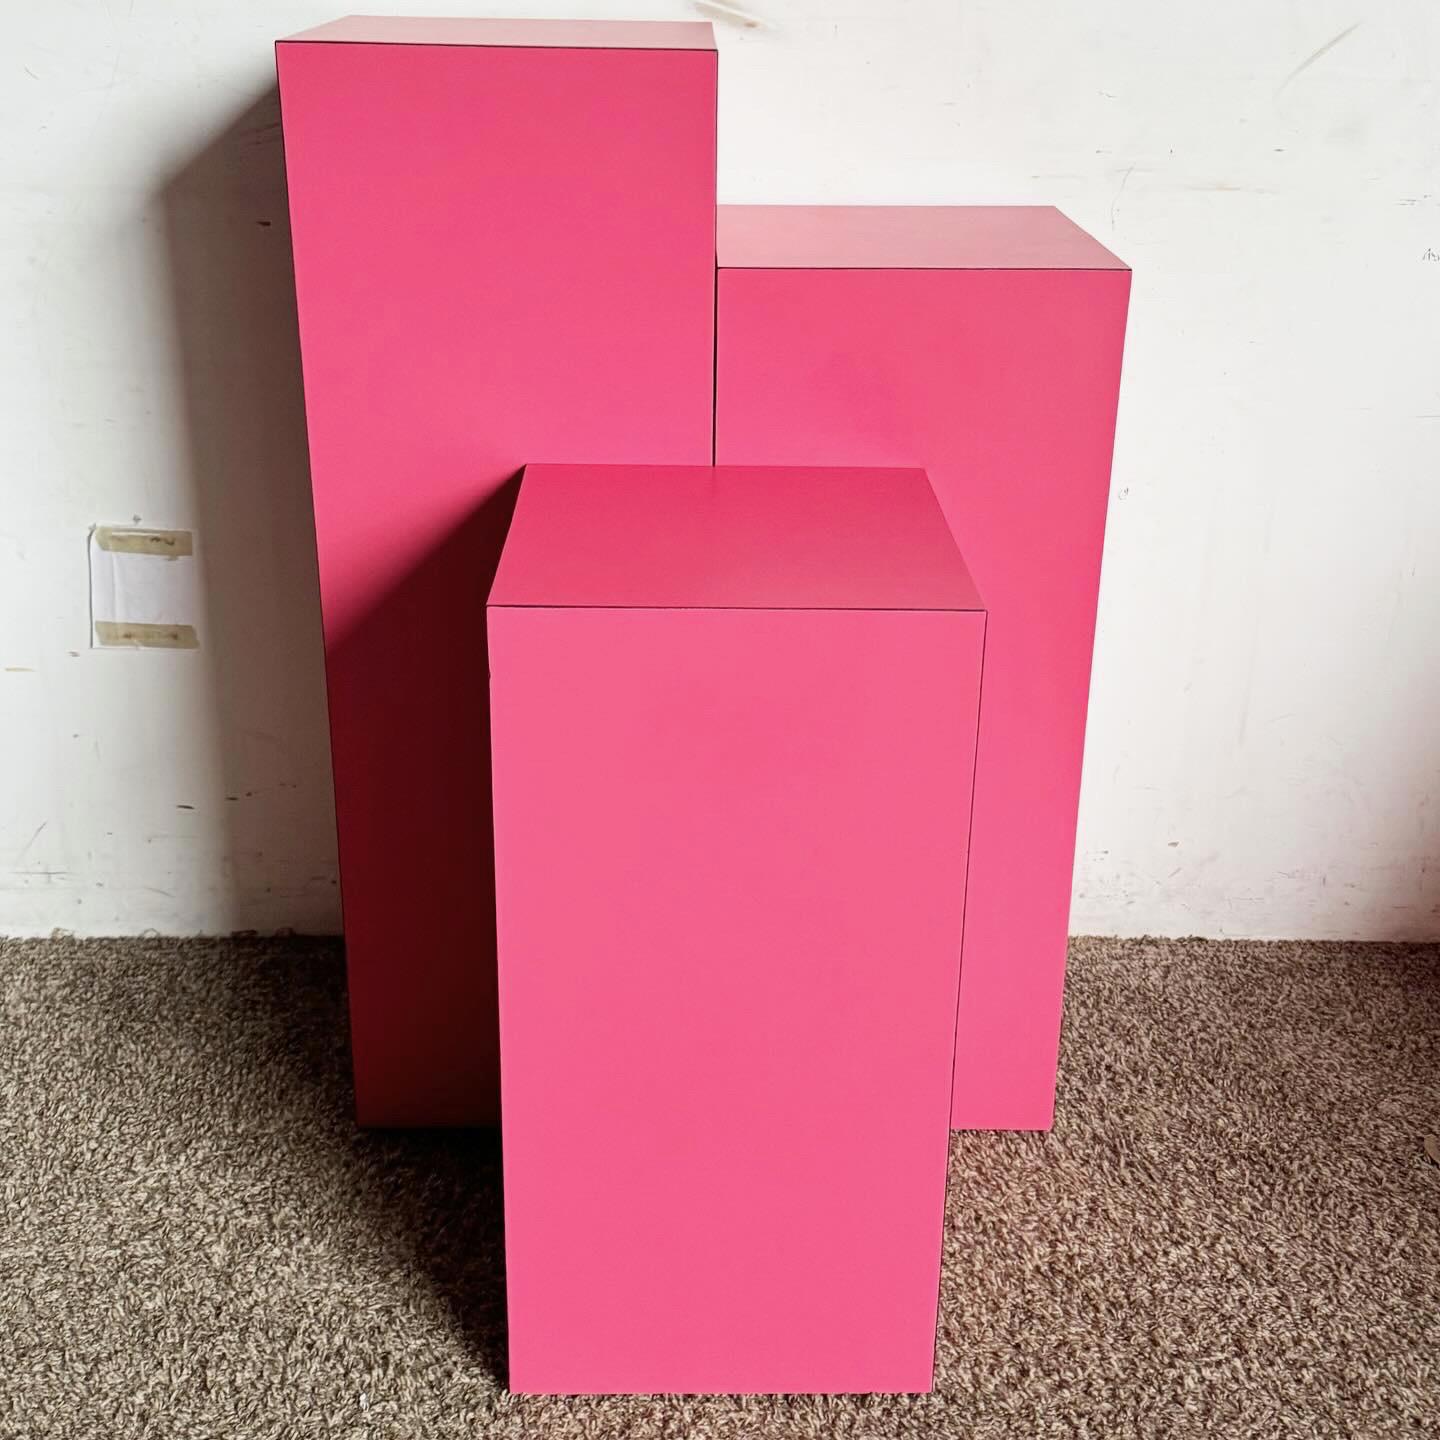 Postmodernes, rechteckiges, heißrosa, mattes Laminat-Sockel-Set mit aufsteigendem Sockel - 3er-Set (amerikanisch) im Angebot